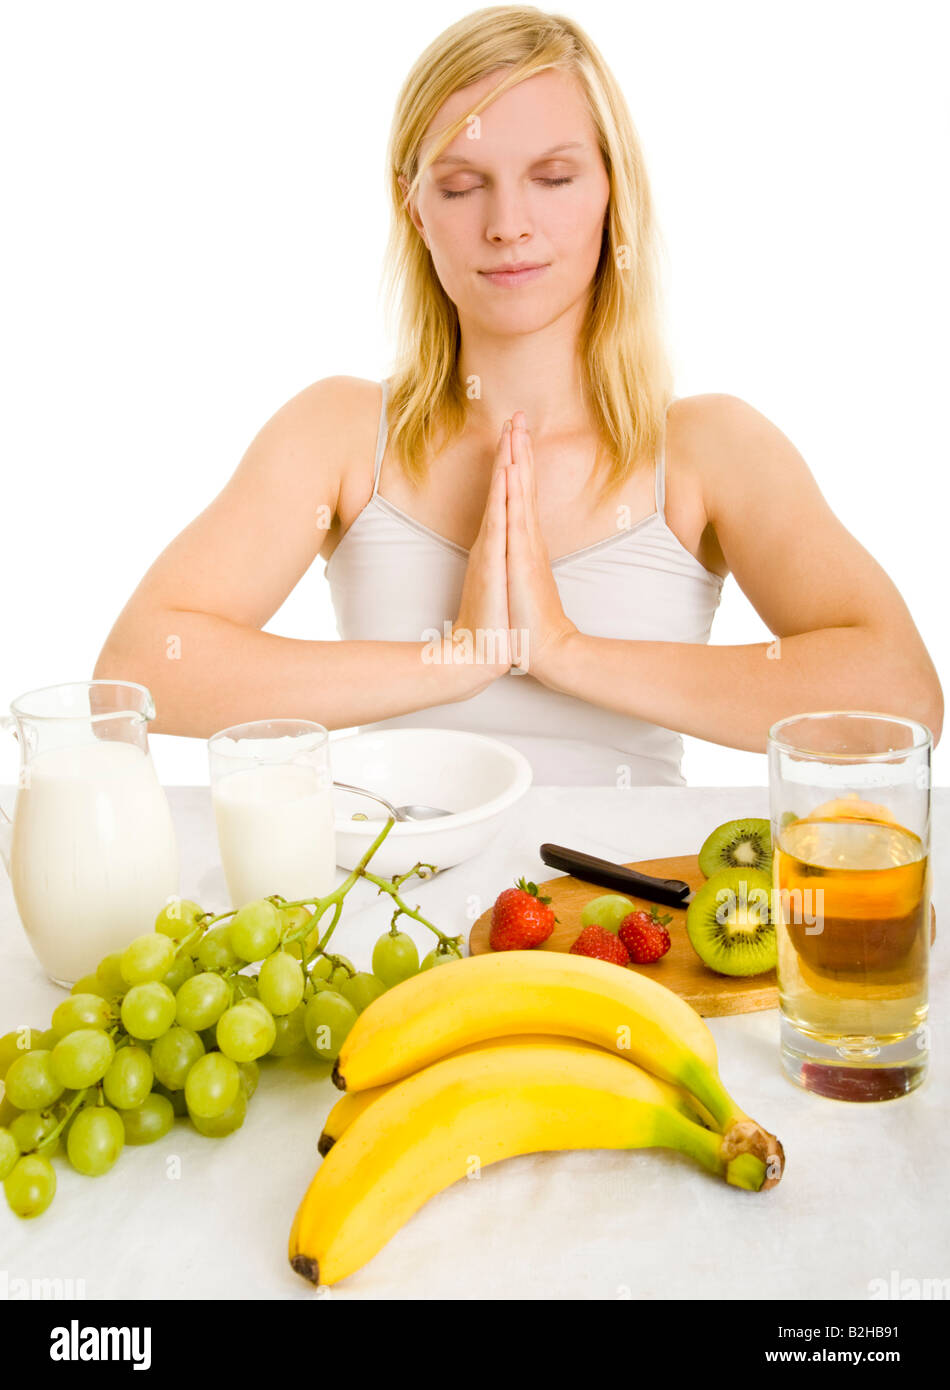 Junge, blonde Frau Frühstück Tabelle Obst gesunde Lebensmittel Morgen Bananen Äpfel Trauben Körper Pflege Wellness Entspannung Stockfoto